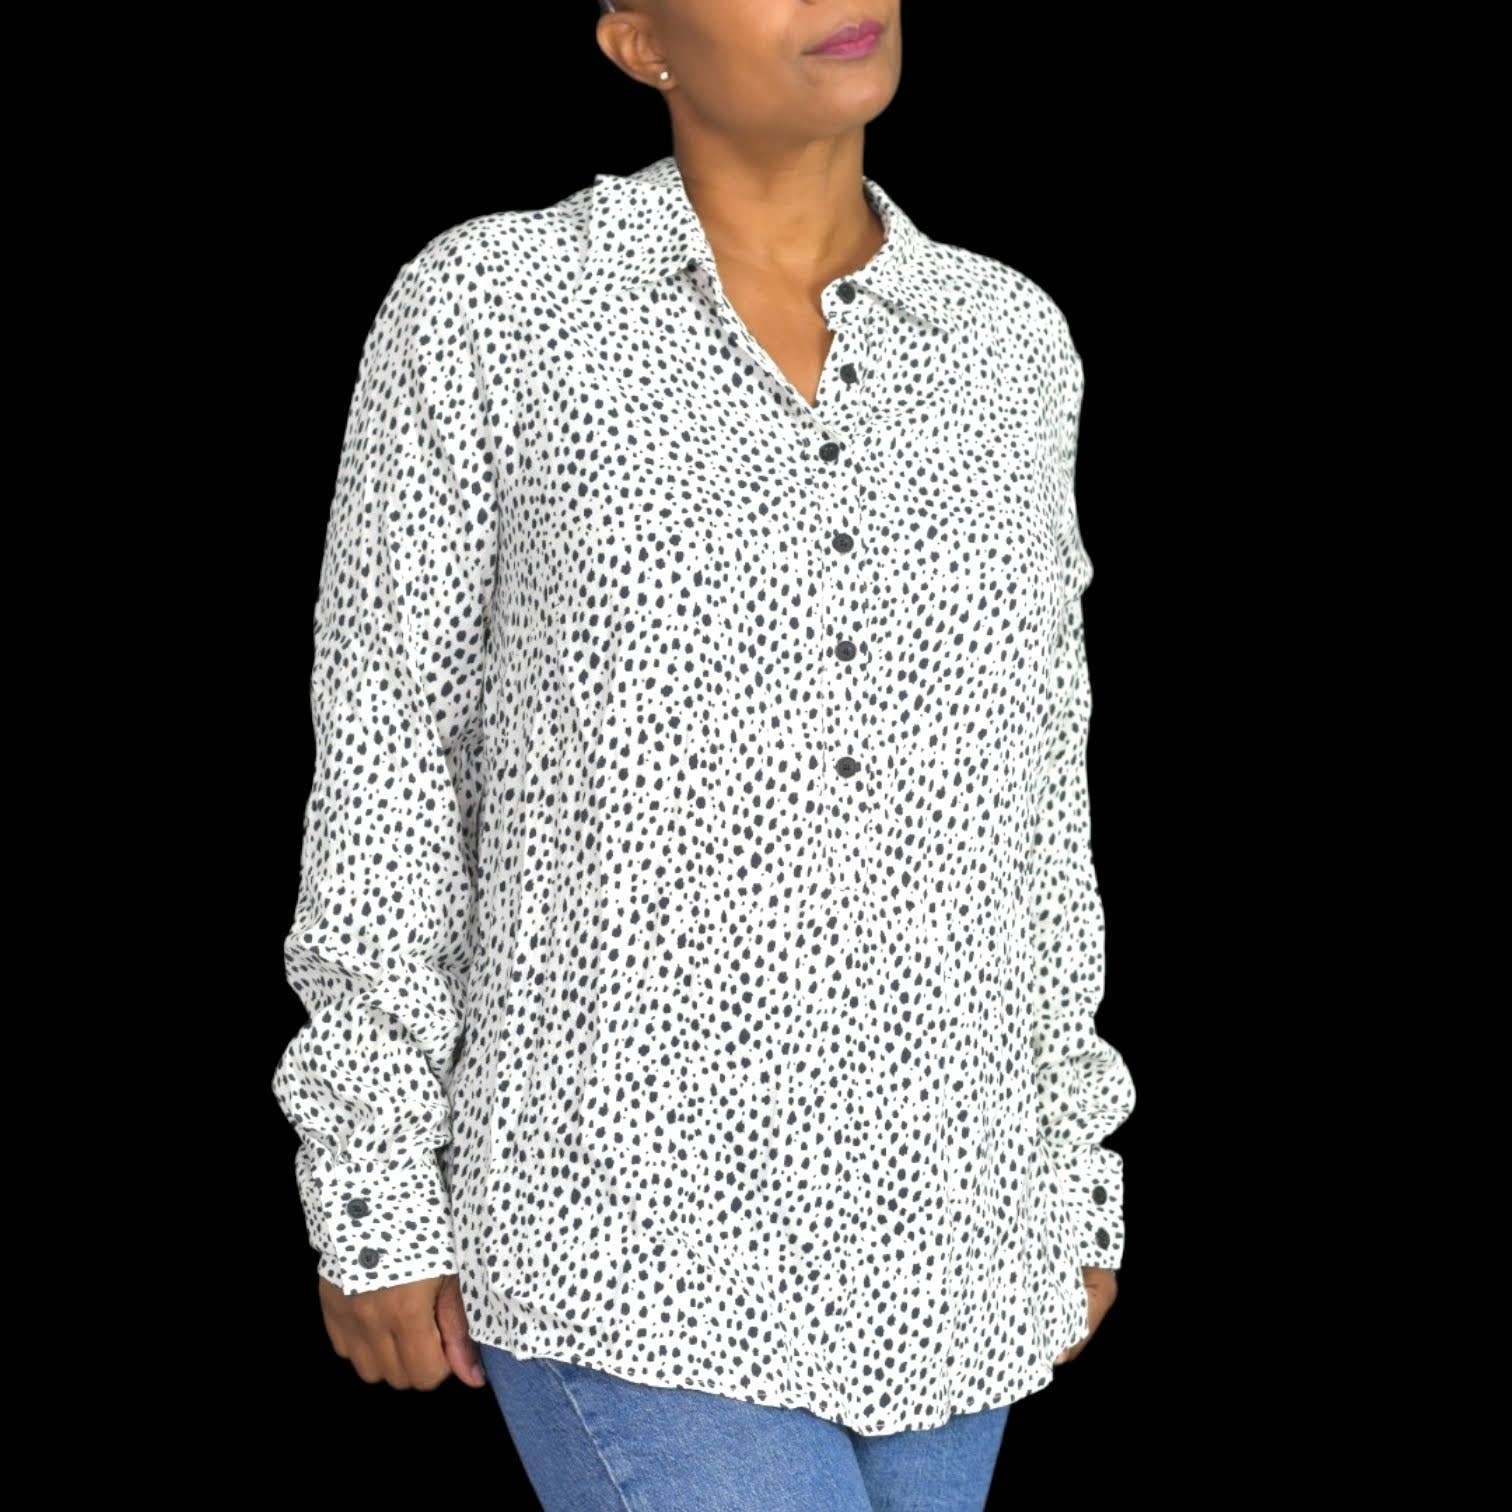 Emerson Fry Ribbons Blouse Black White Cheetah Animal Print Shirt Size Large